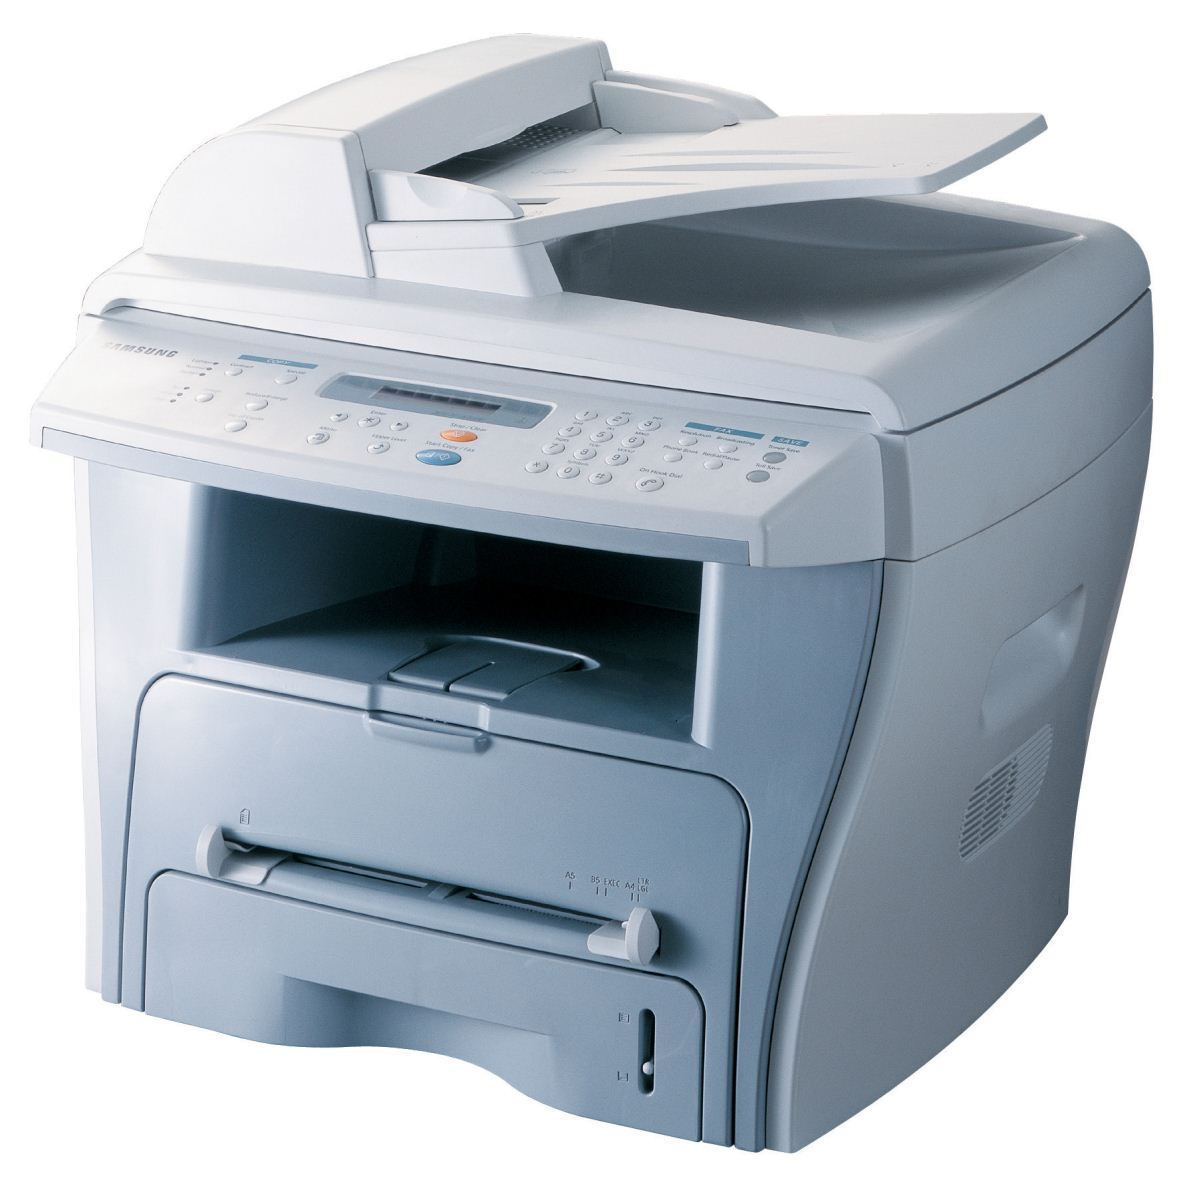 Máy in Samsung SCX 4216F, In, Scan, Copy, Fax, Laser trắng đen